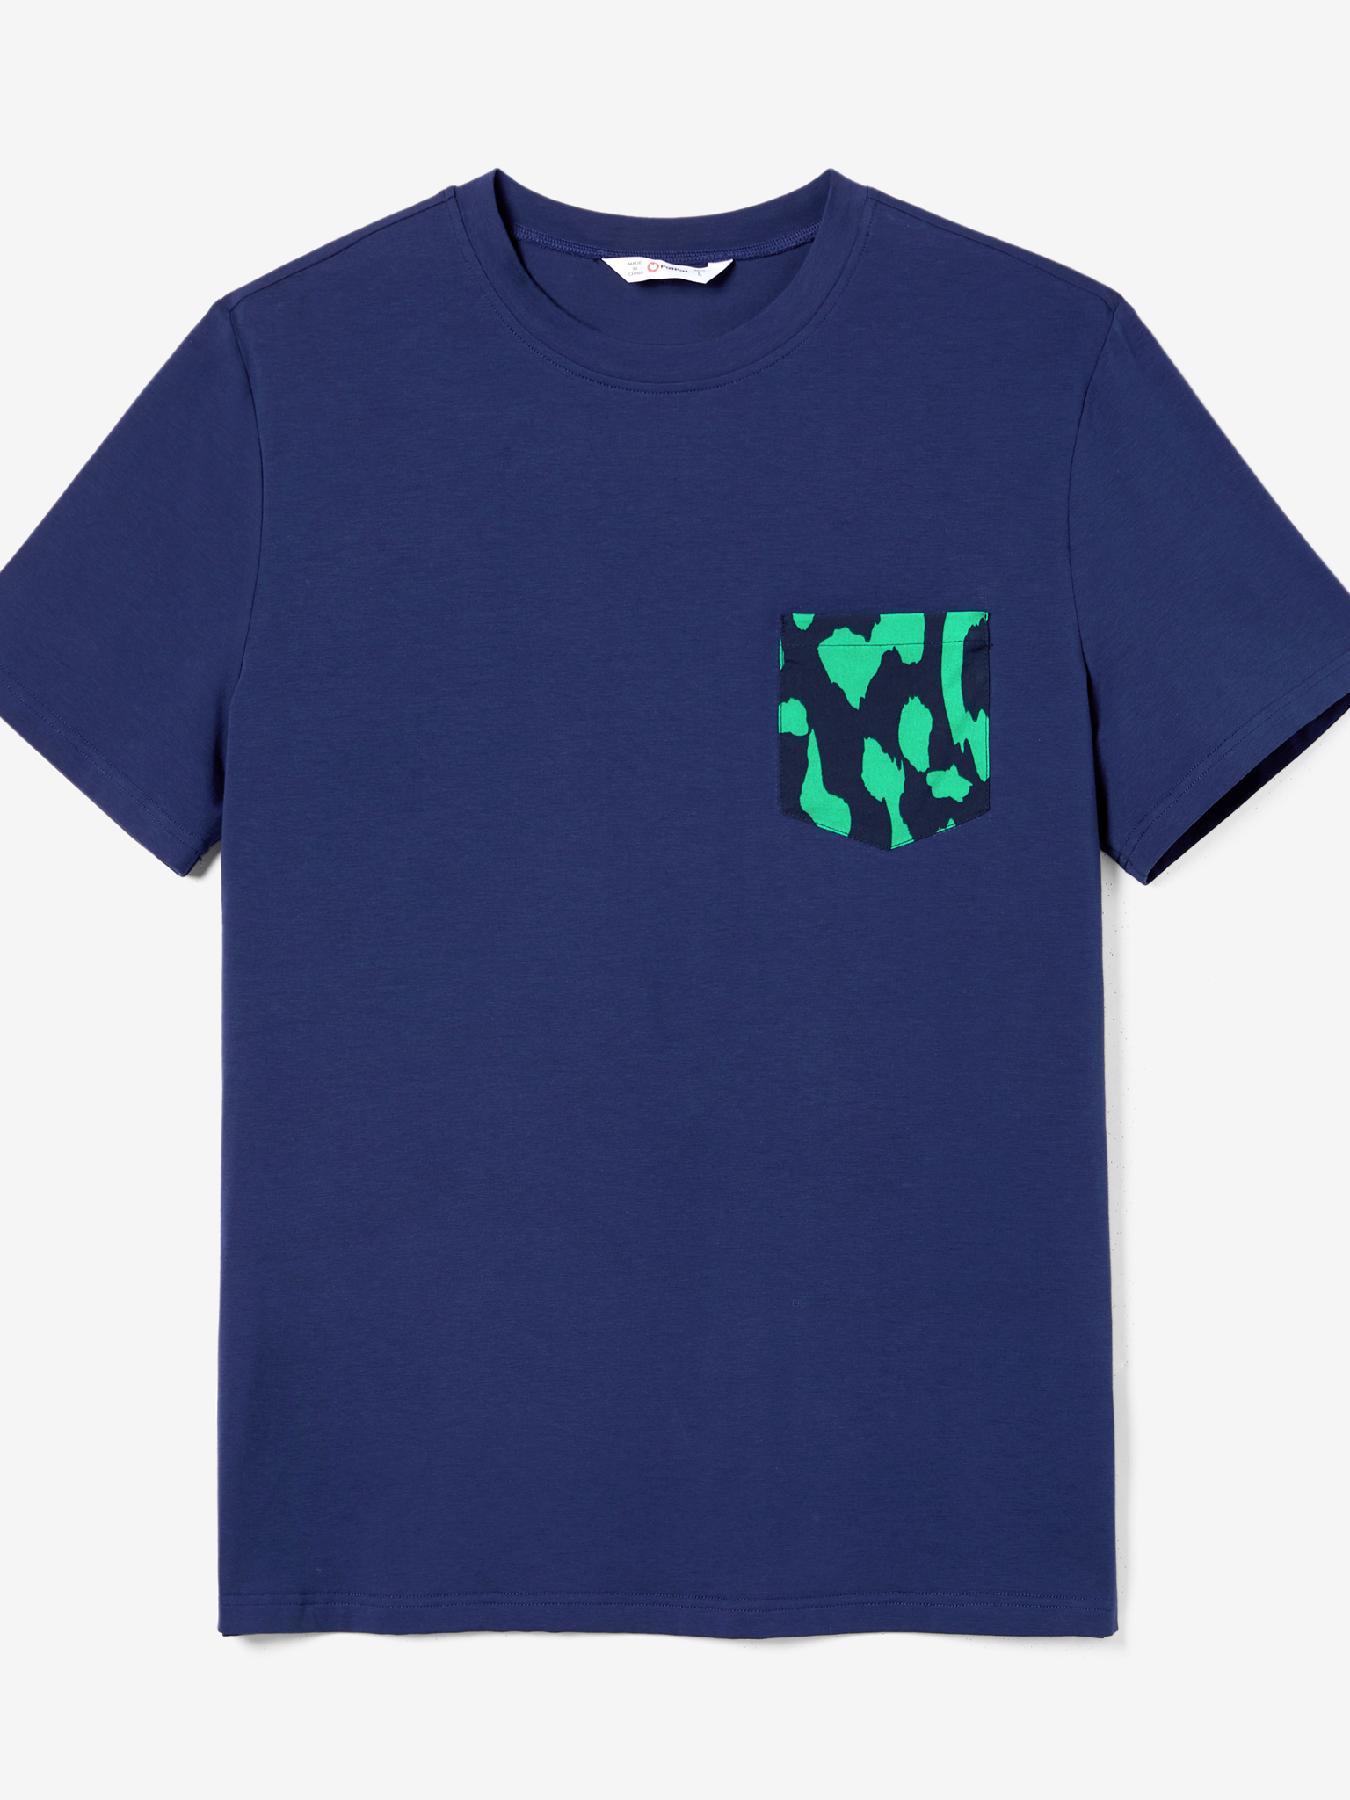 Camiseta niño/a m/larga Yayo - Sac samarretes